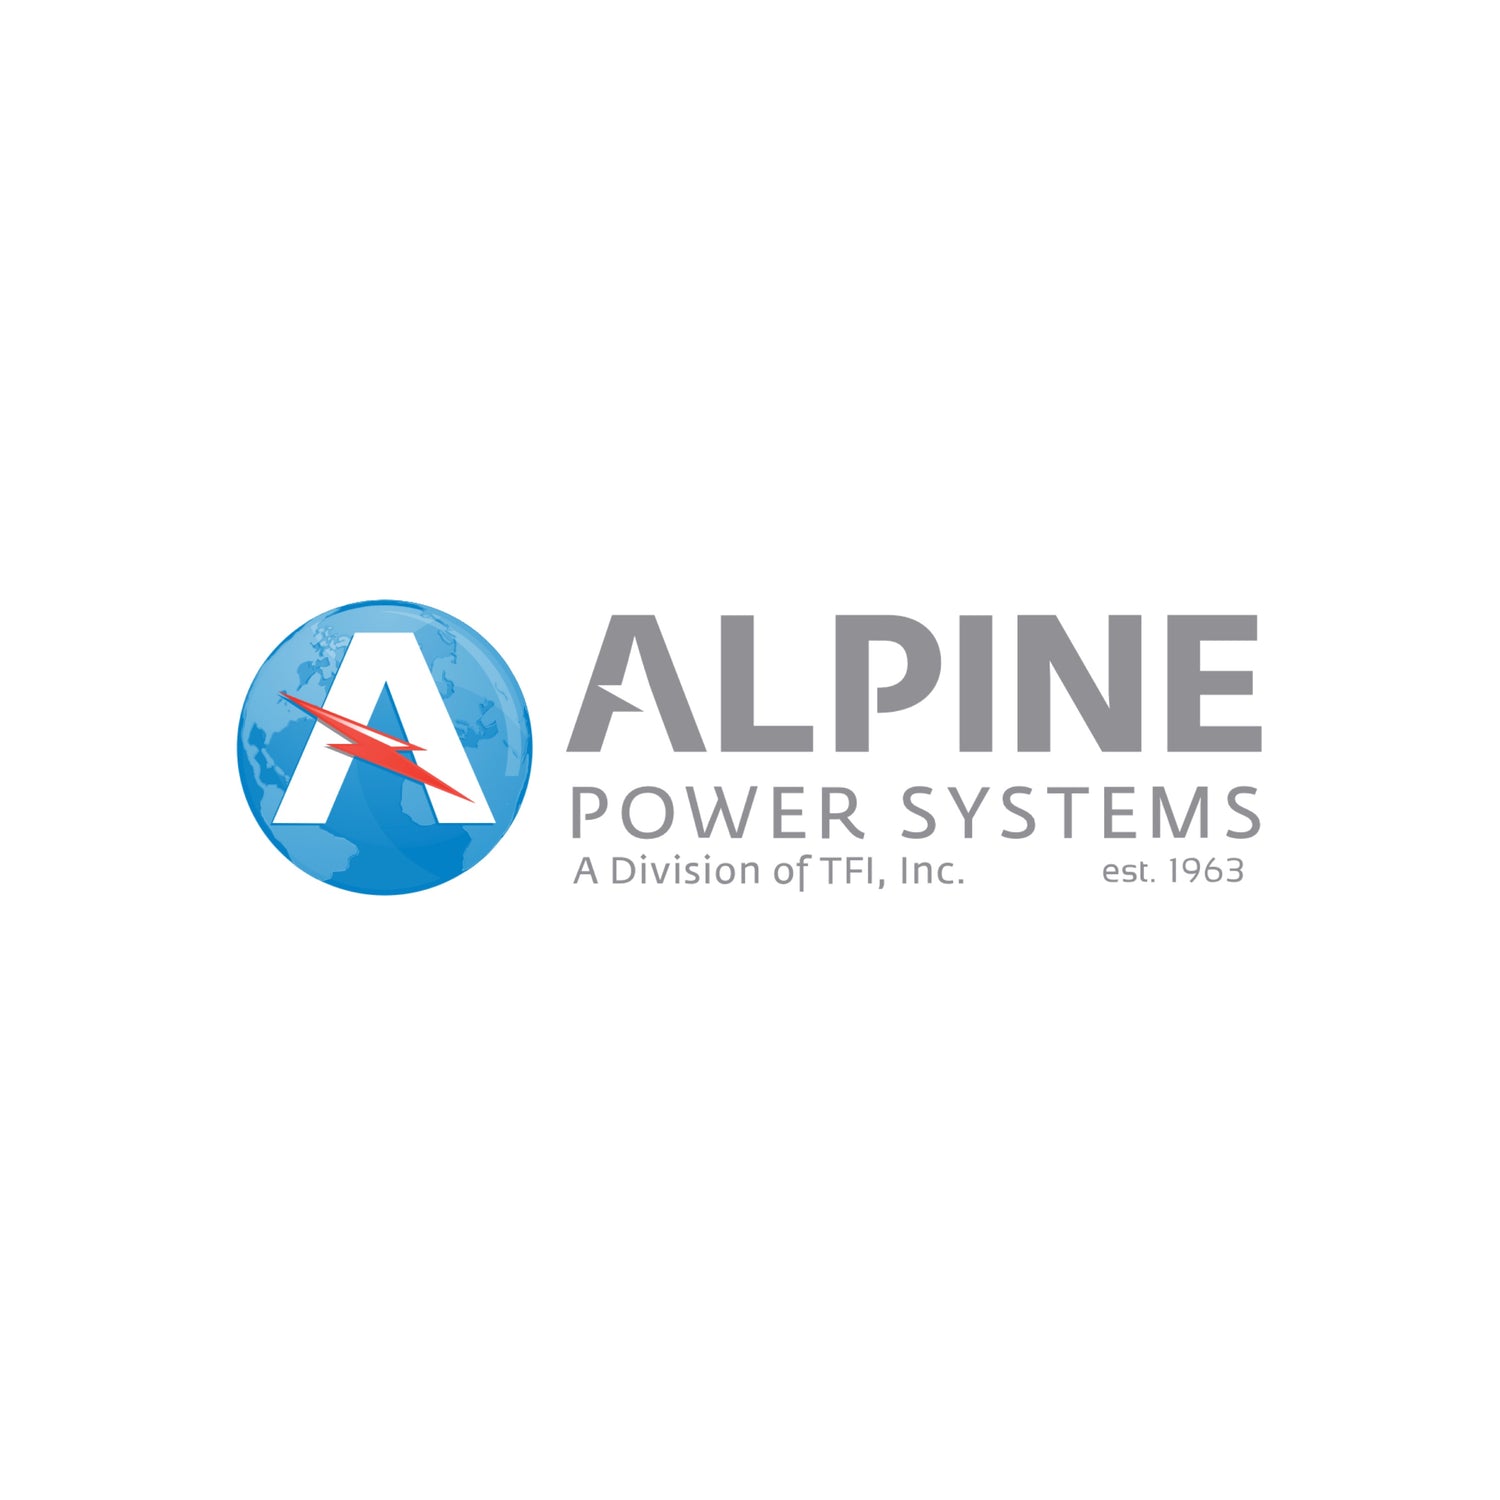 ALPINE POWER SYSTEMS INC.